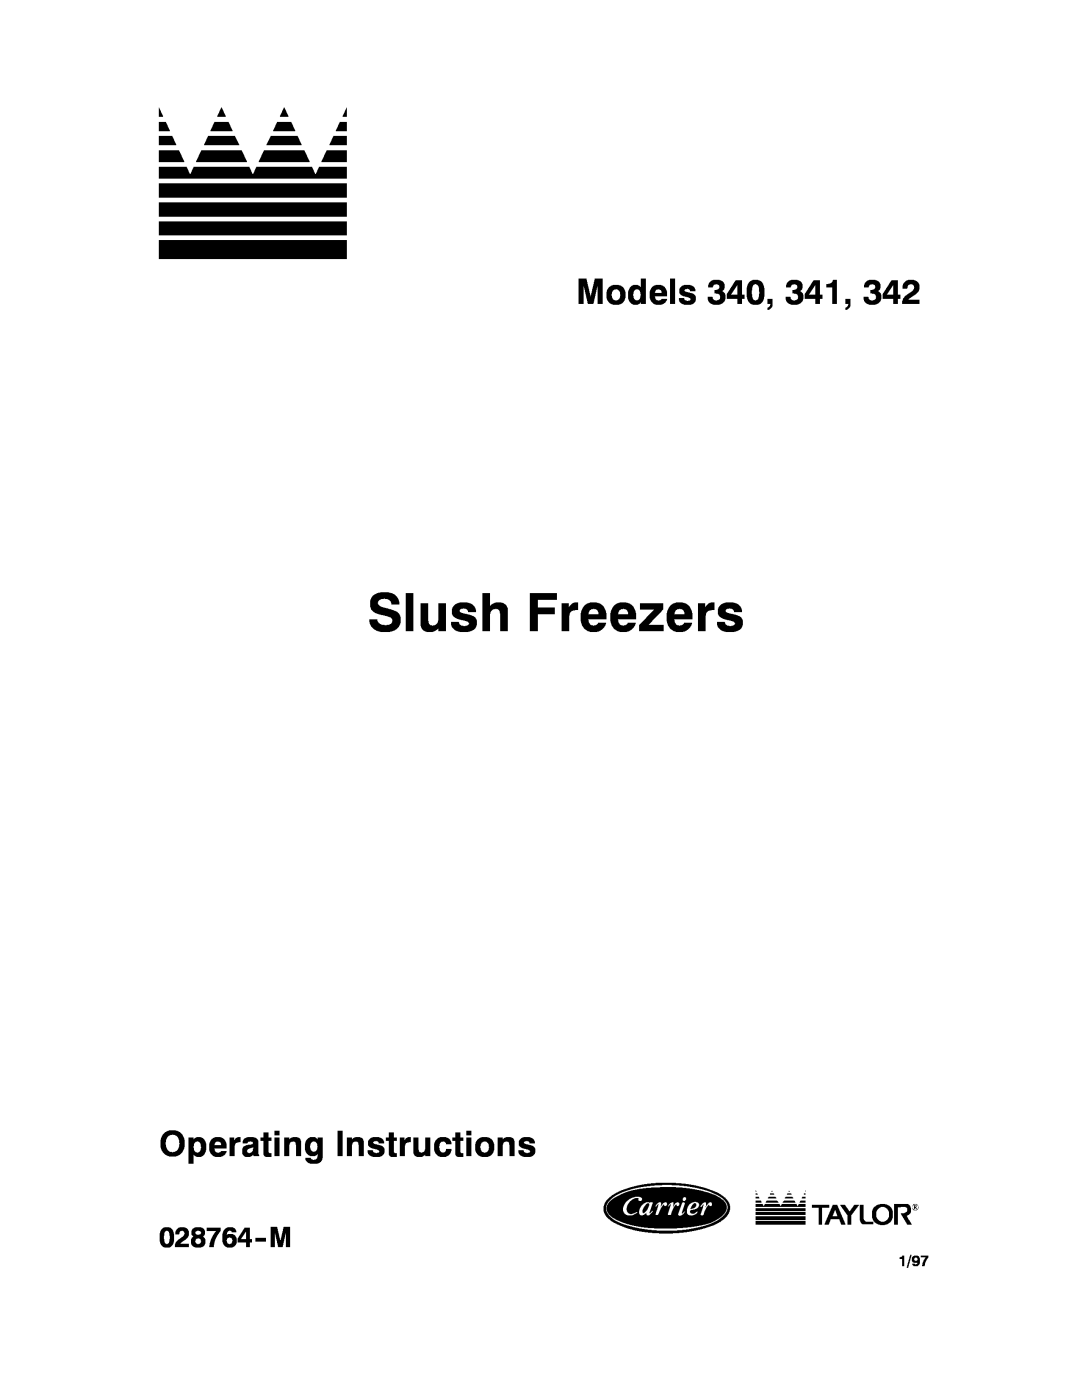 Taylor 342 manual Slush Freezers, Models 340, 341, Operating Instructions, 028764-M, 1/97 